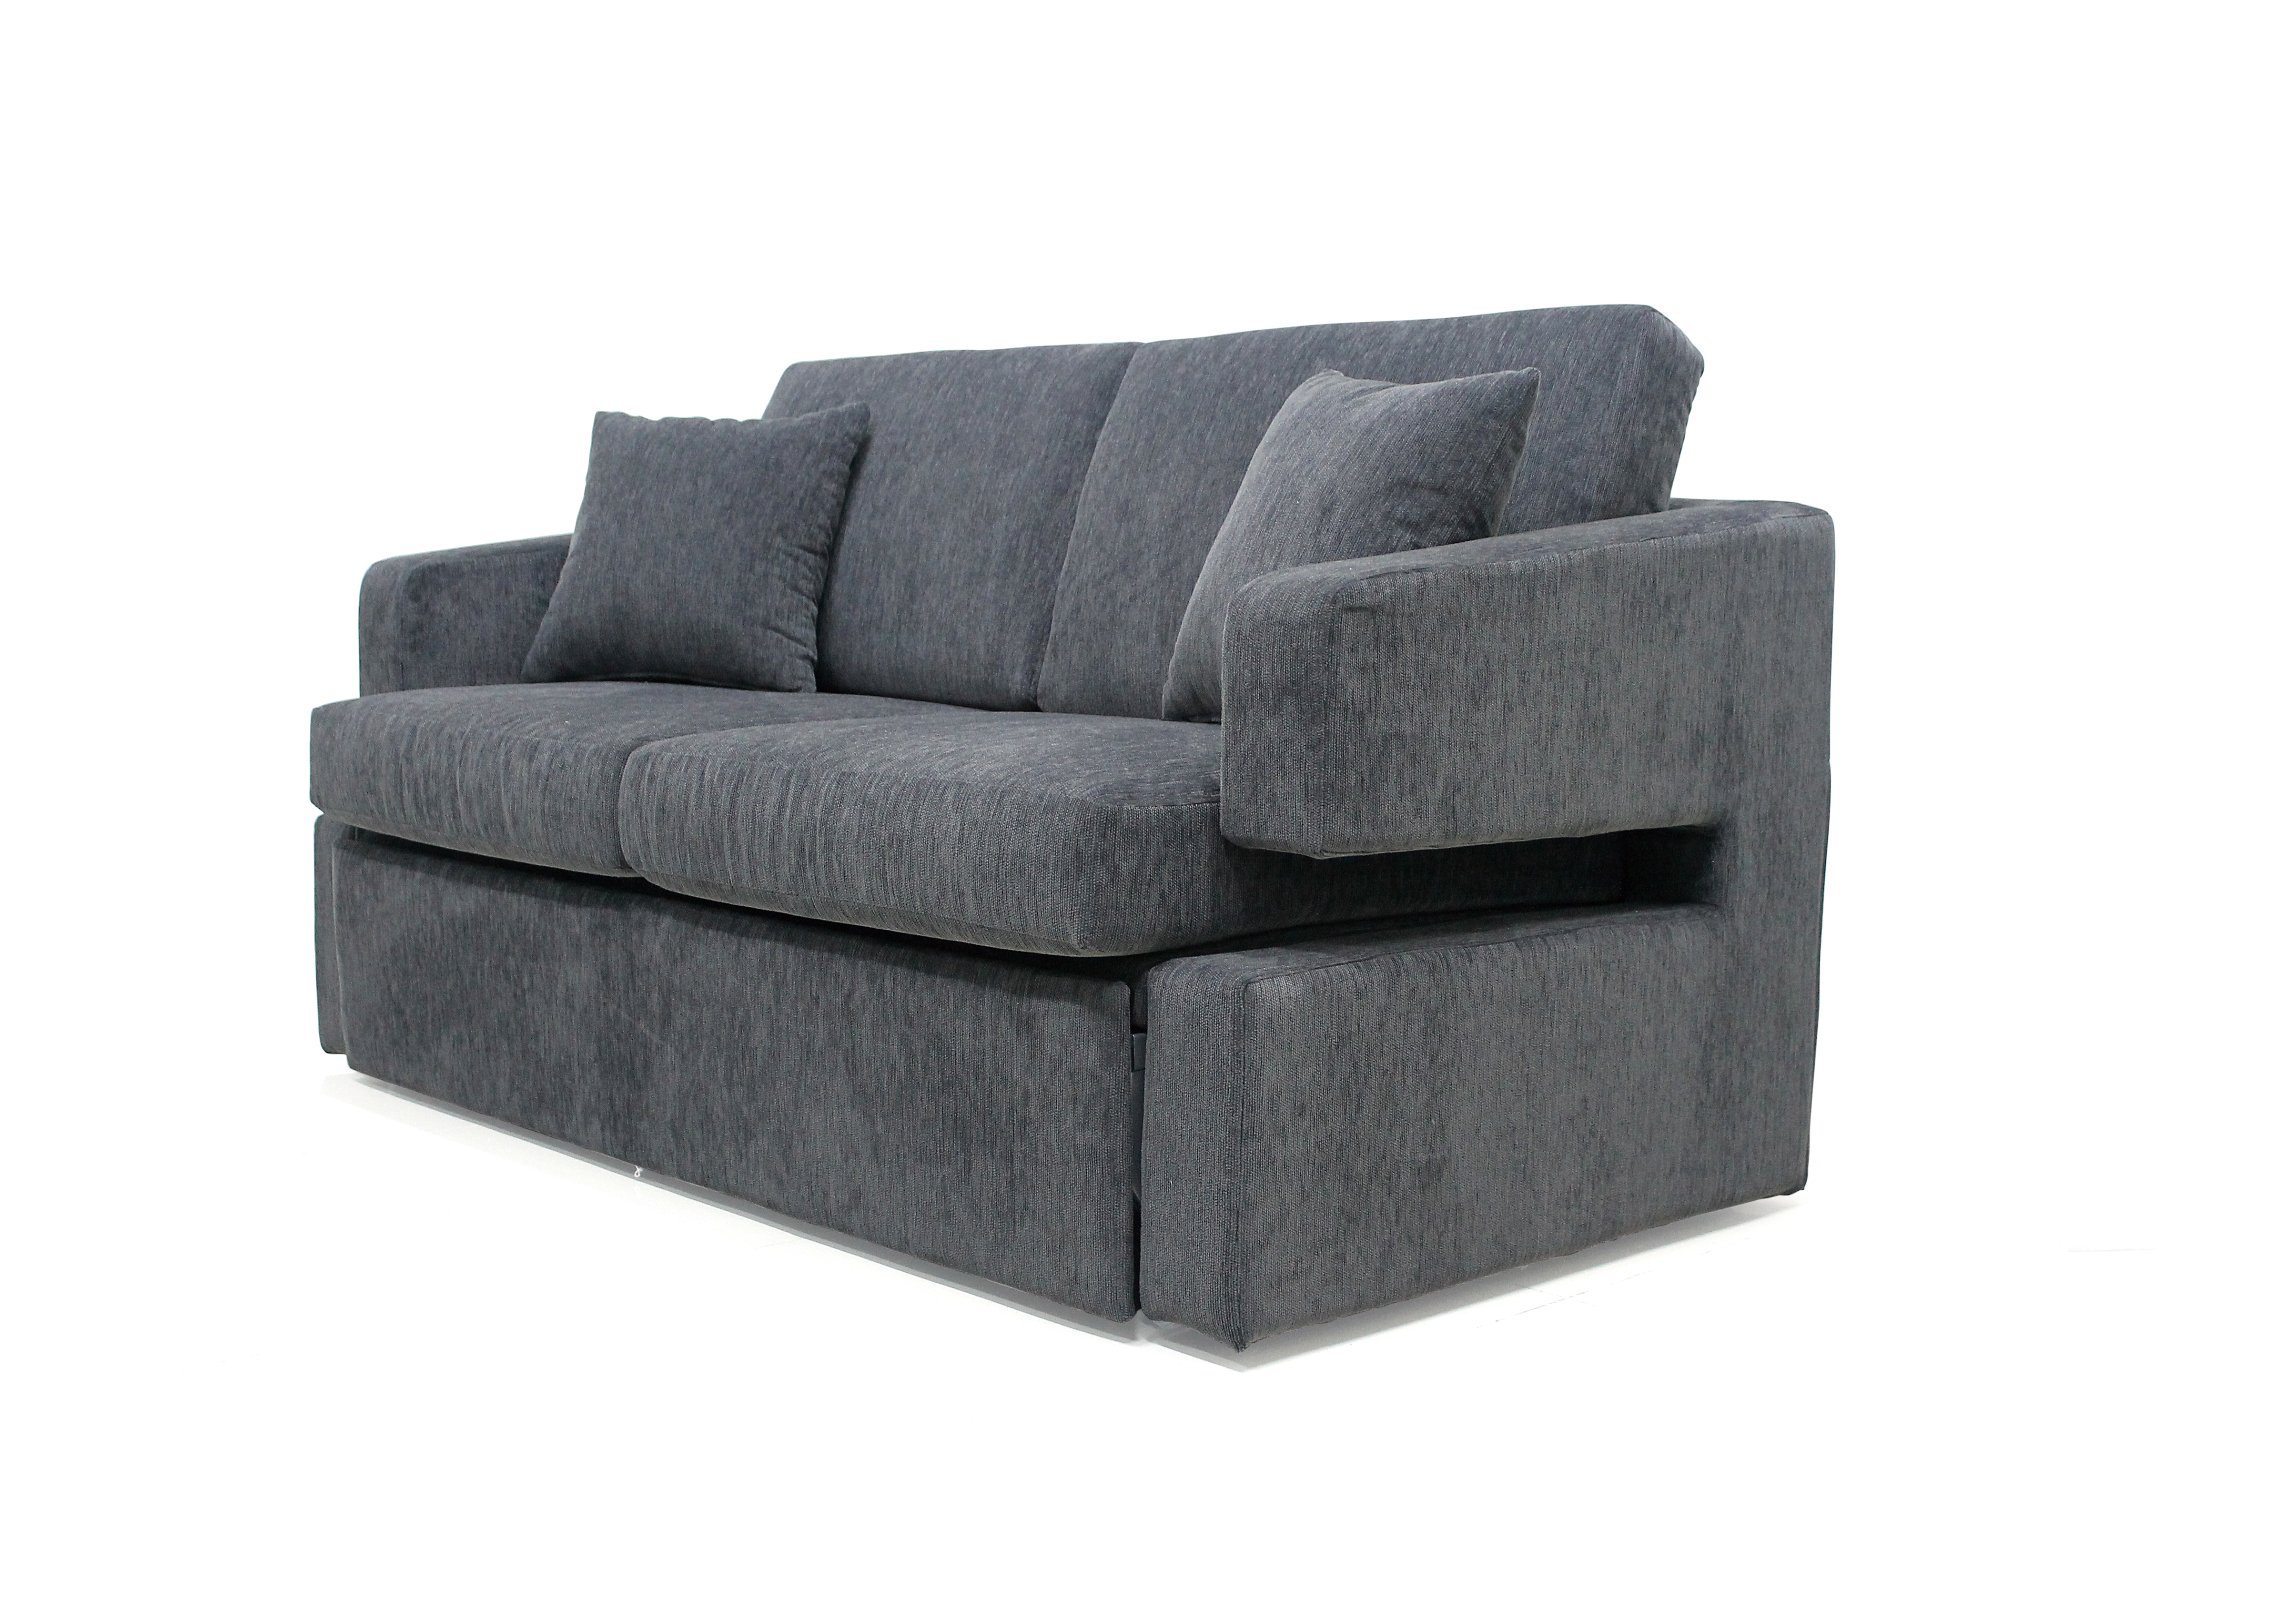 sofa bed sb furniture ราคา